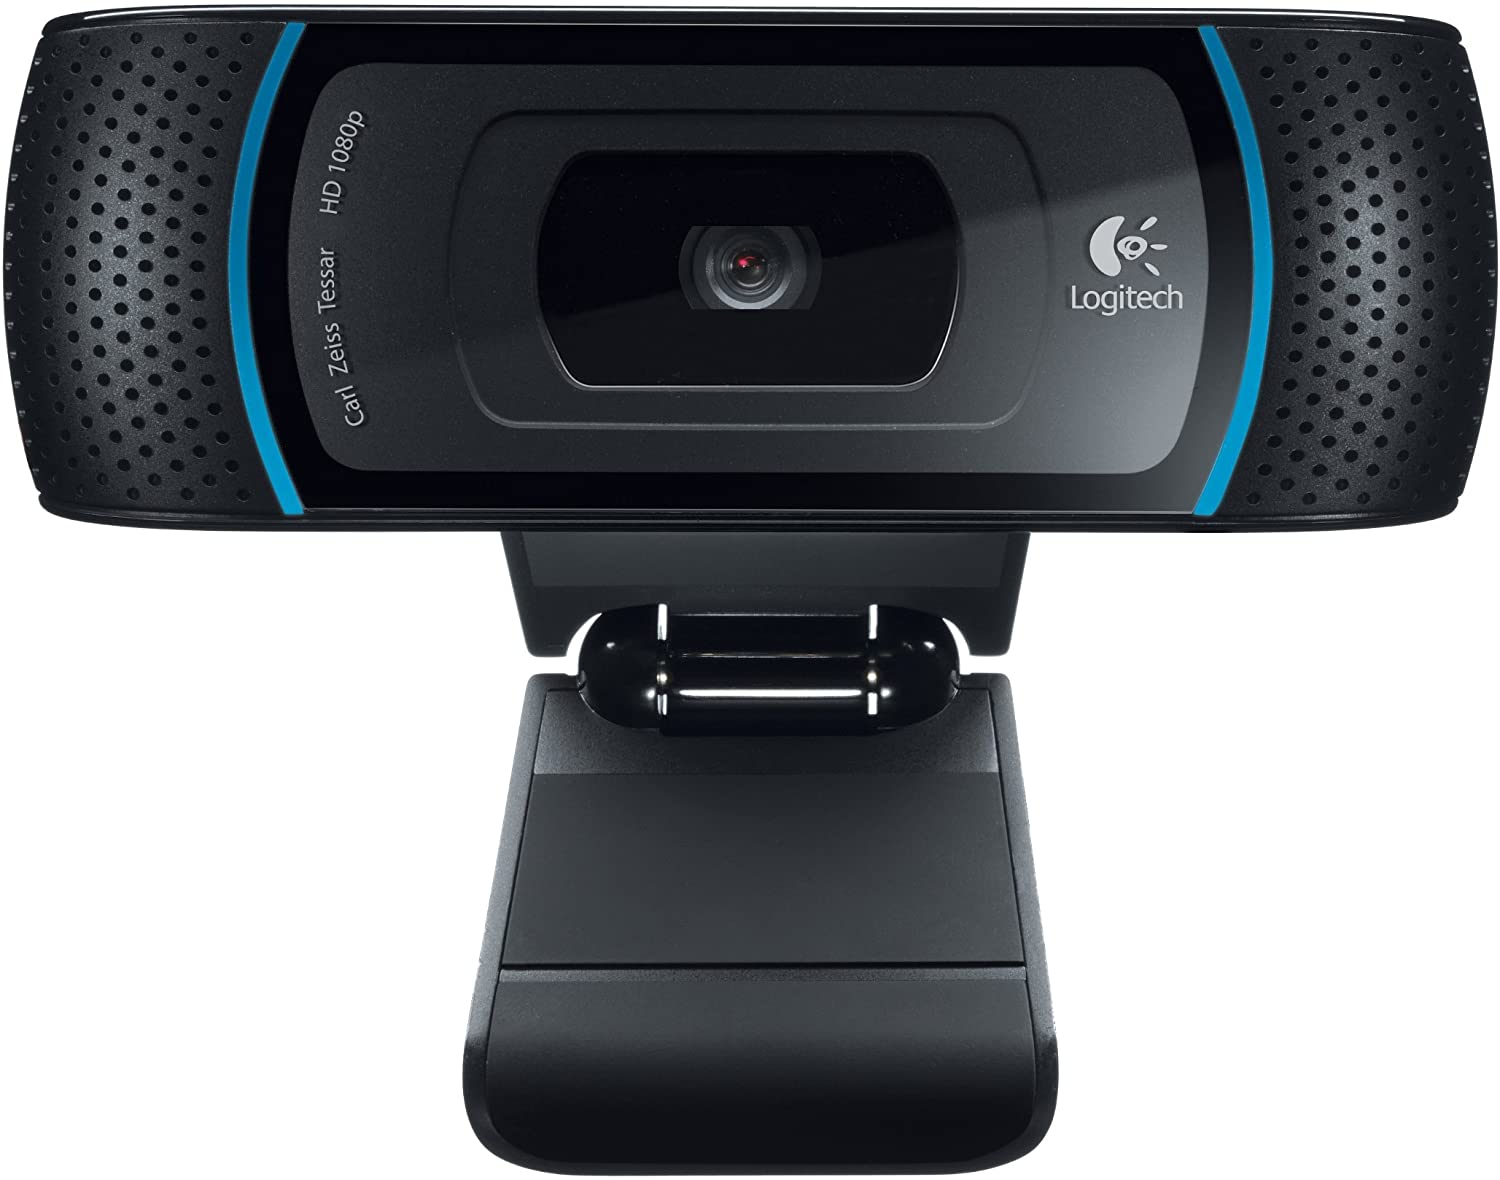 Carl Zeiss Logitech C910 1080p HD Pro Webcam  with Carl Zeiss lens brand new in box . 